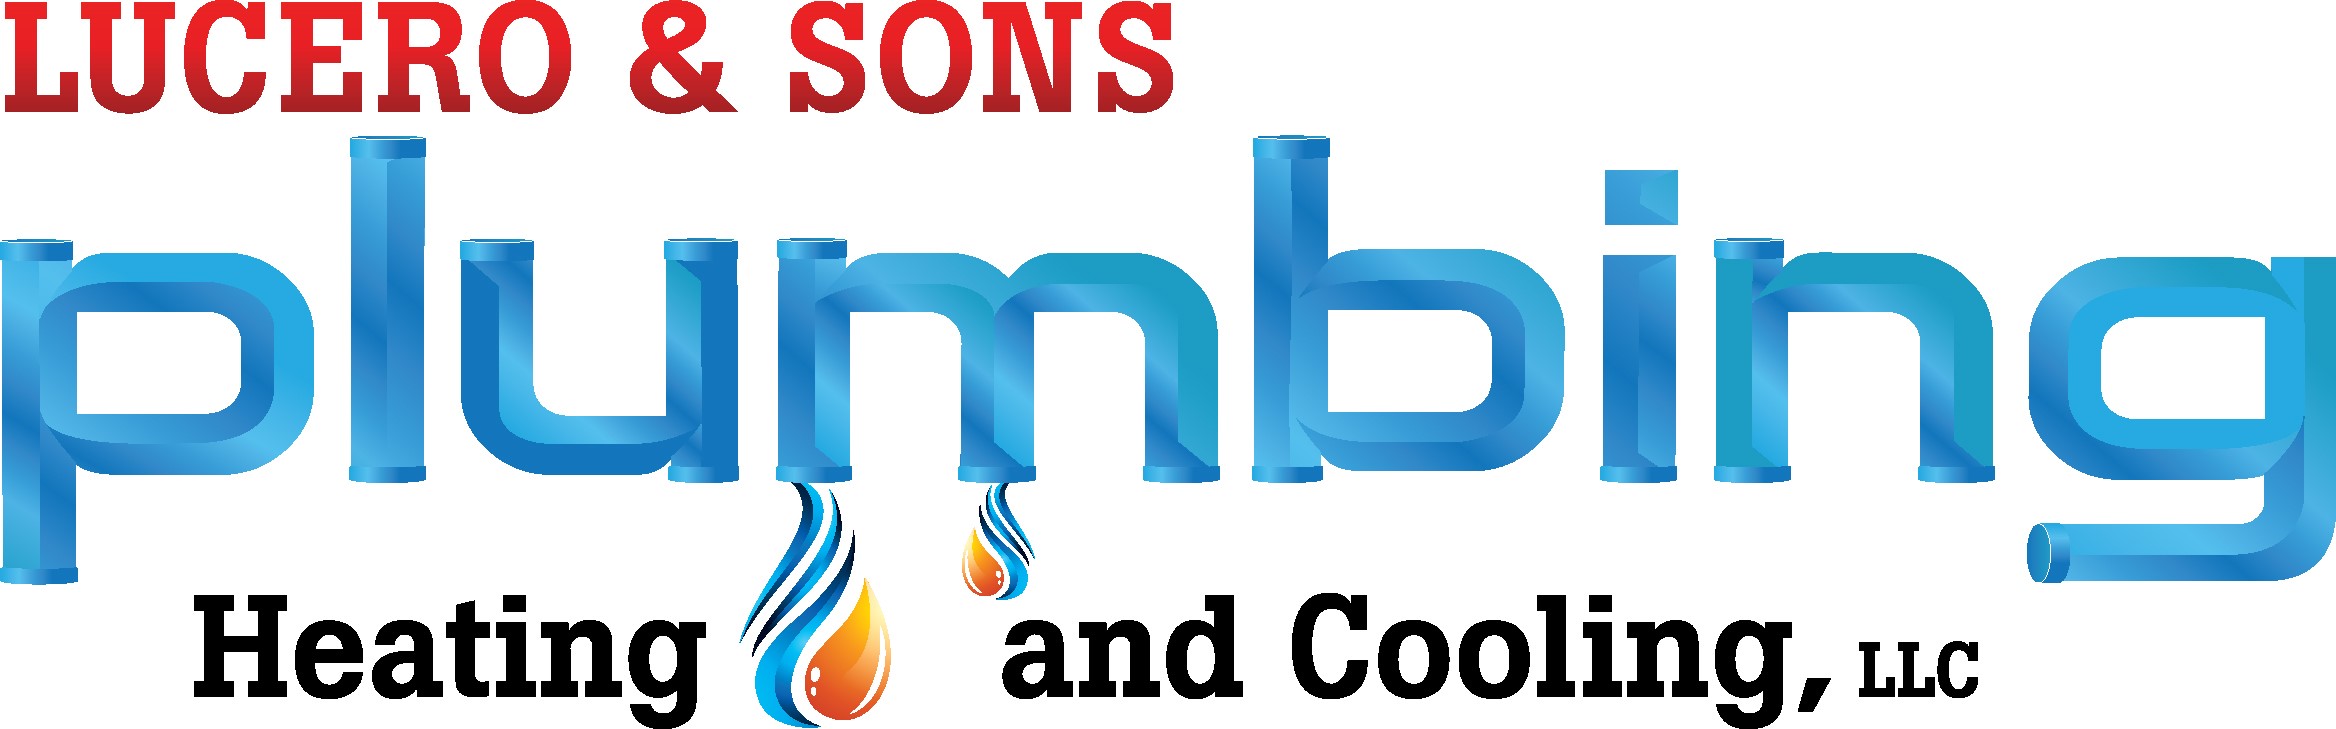 Lucero & Sons Plumbing, Heating & Cooling Logo